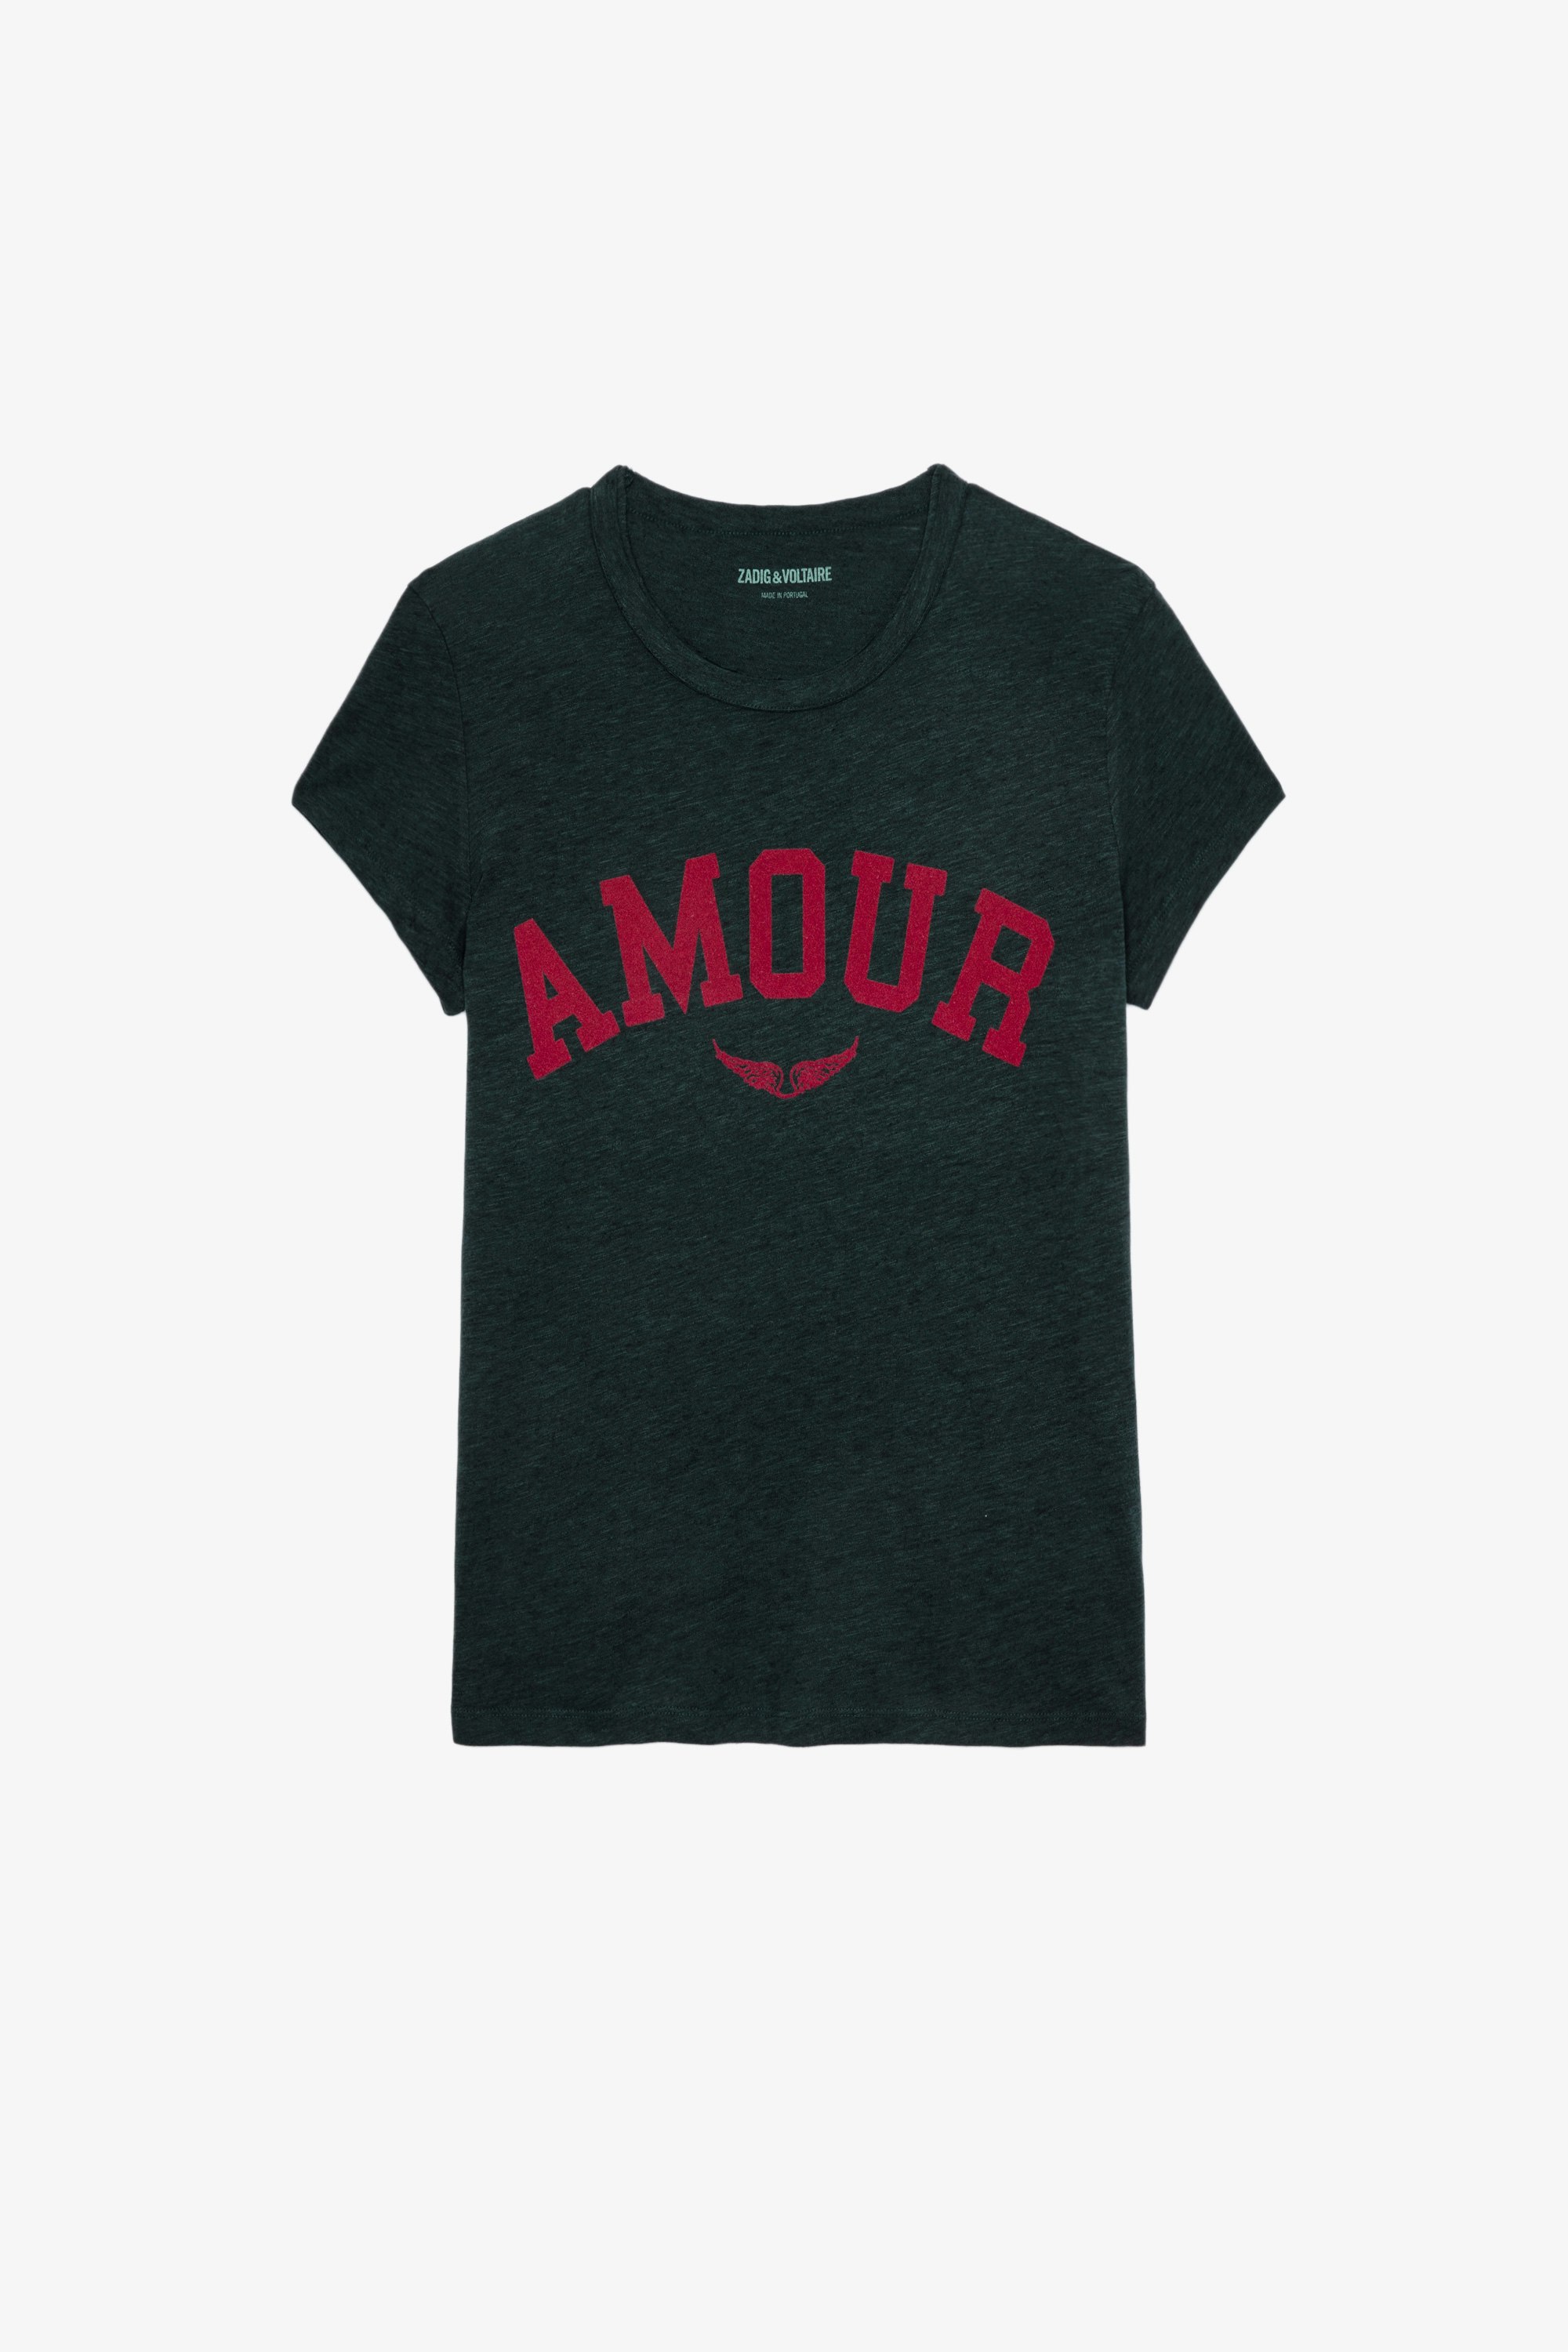 T-shirt Walk Amour T-shirt verde girocollo a maniche corte Amour donna